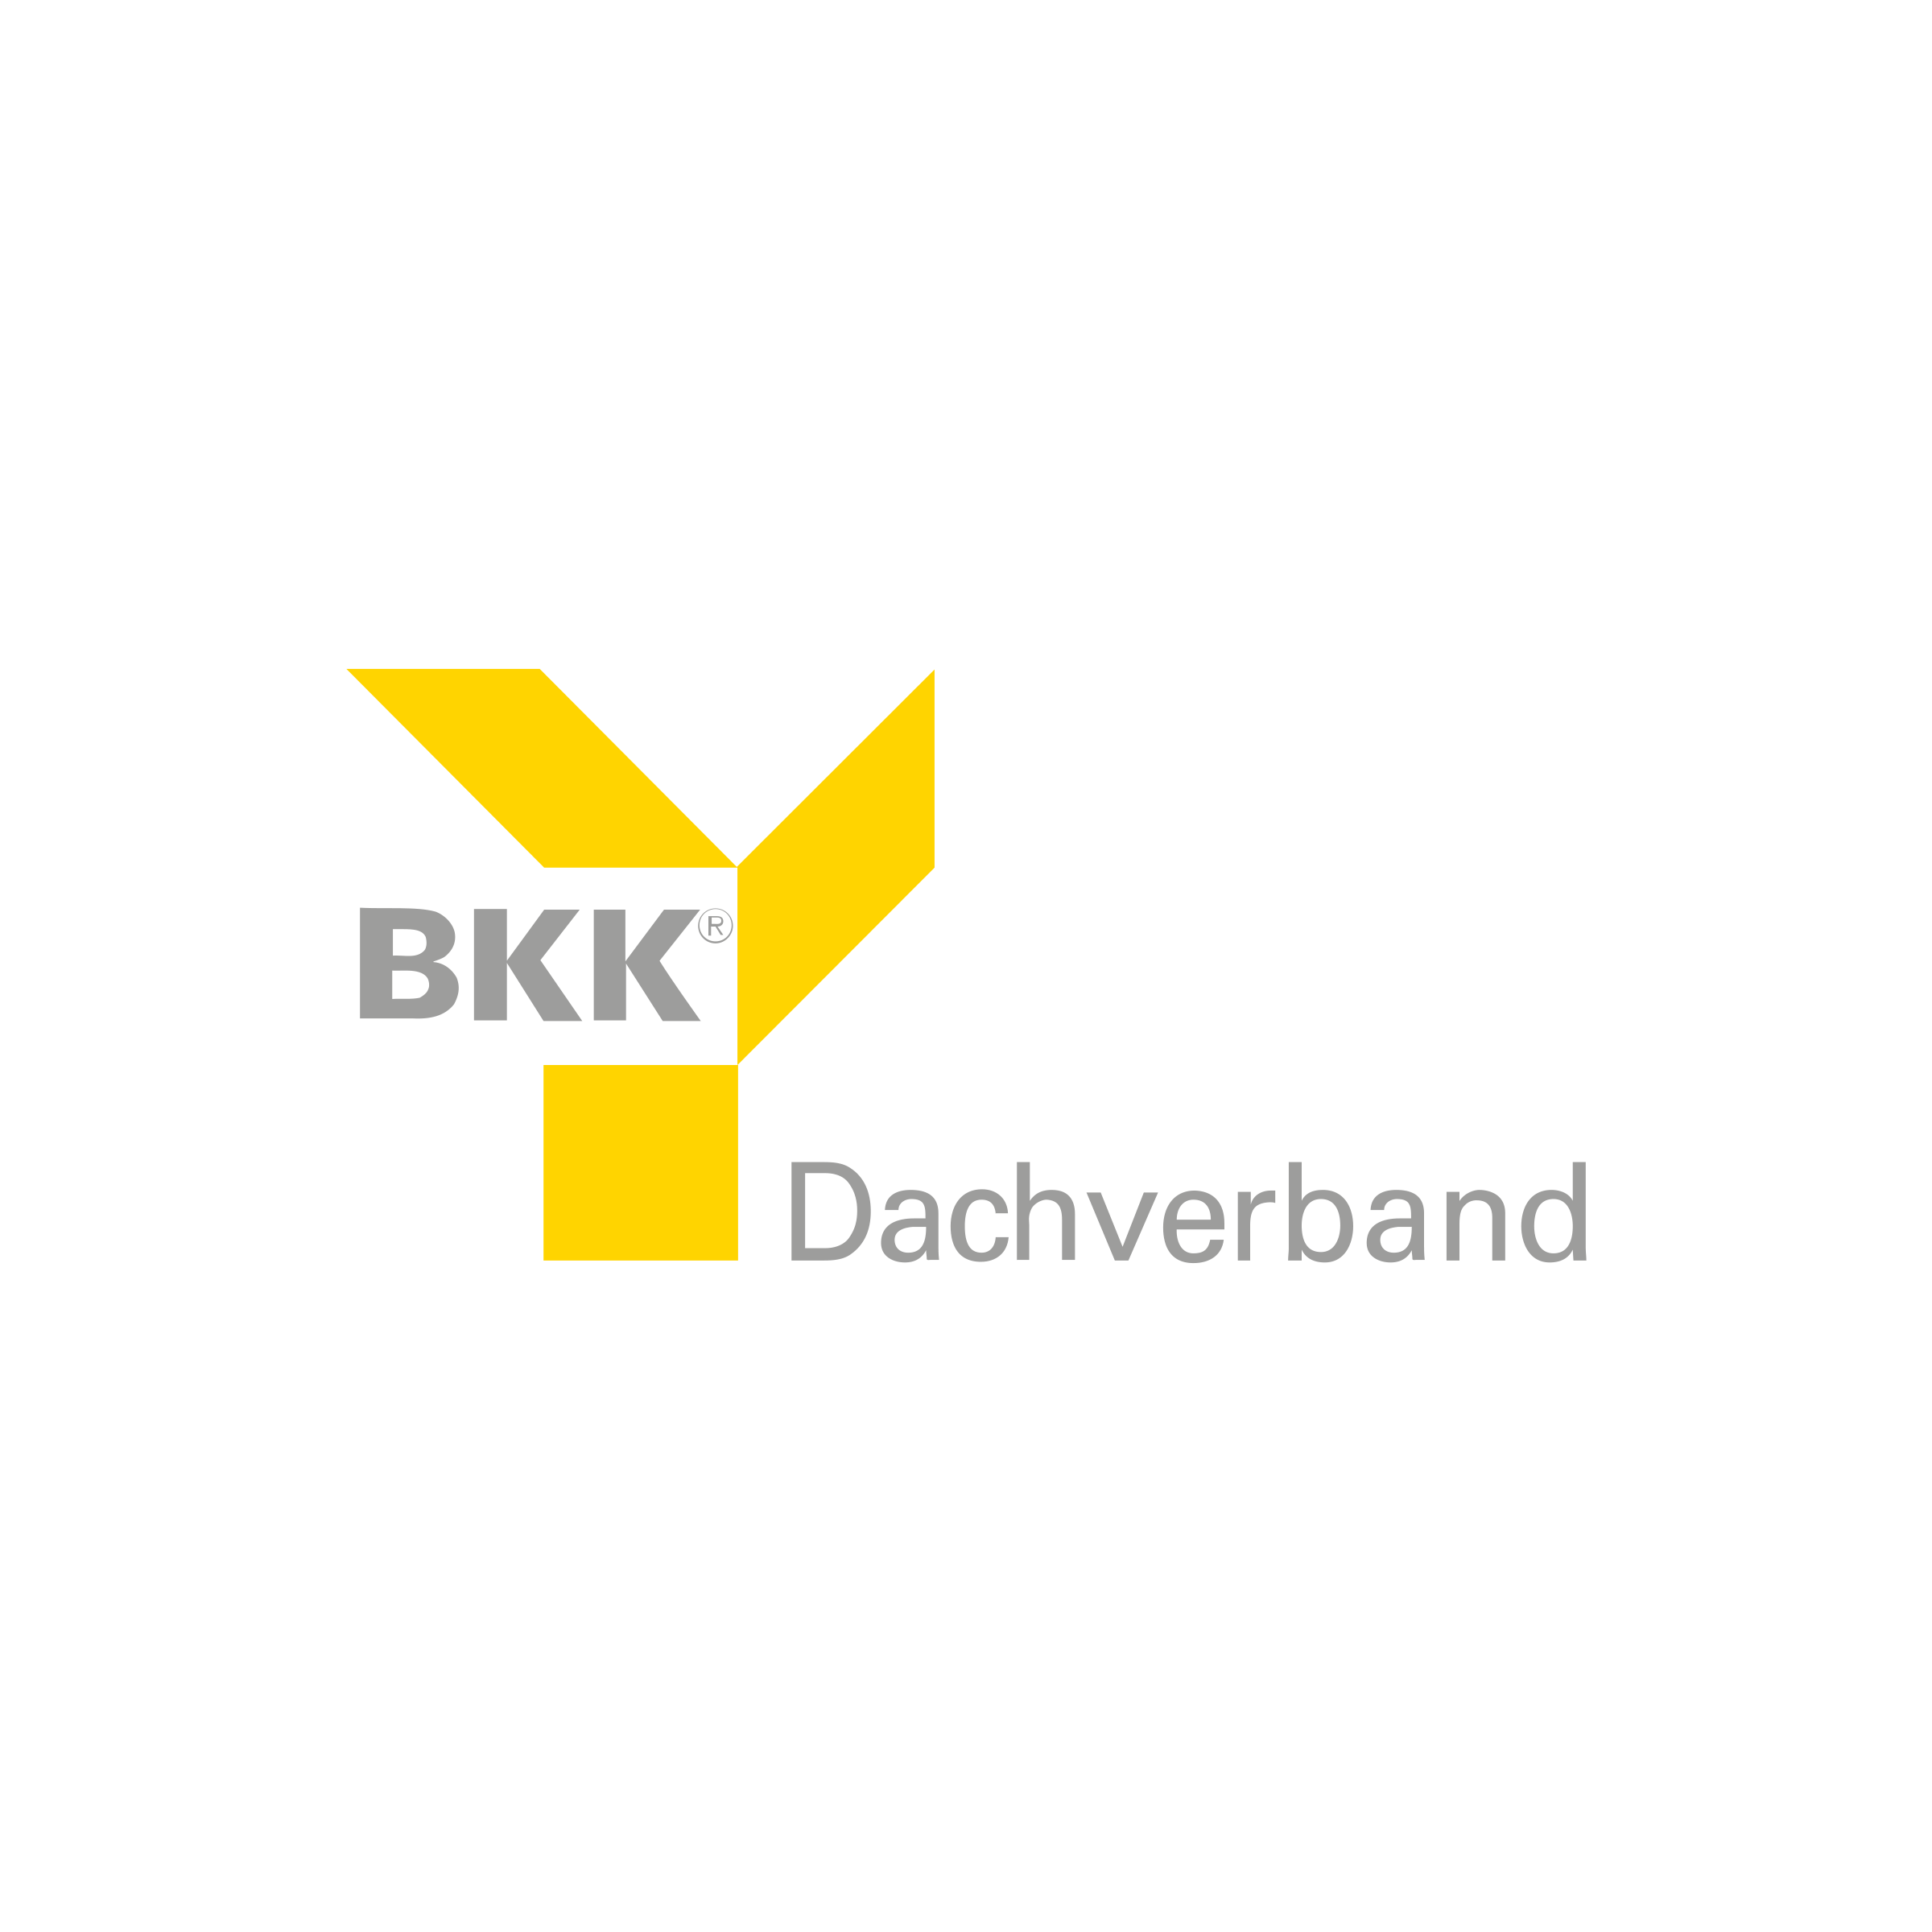 BKK website